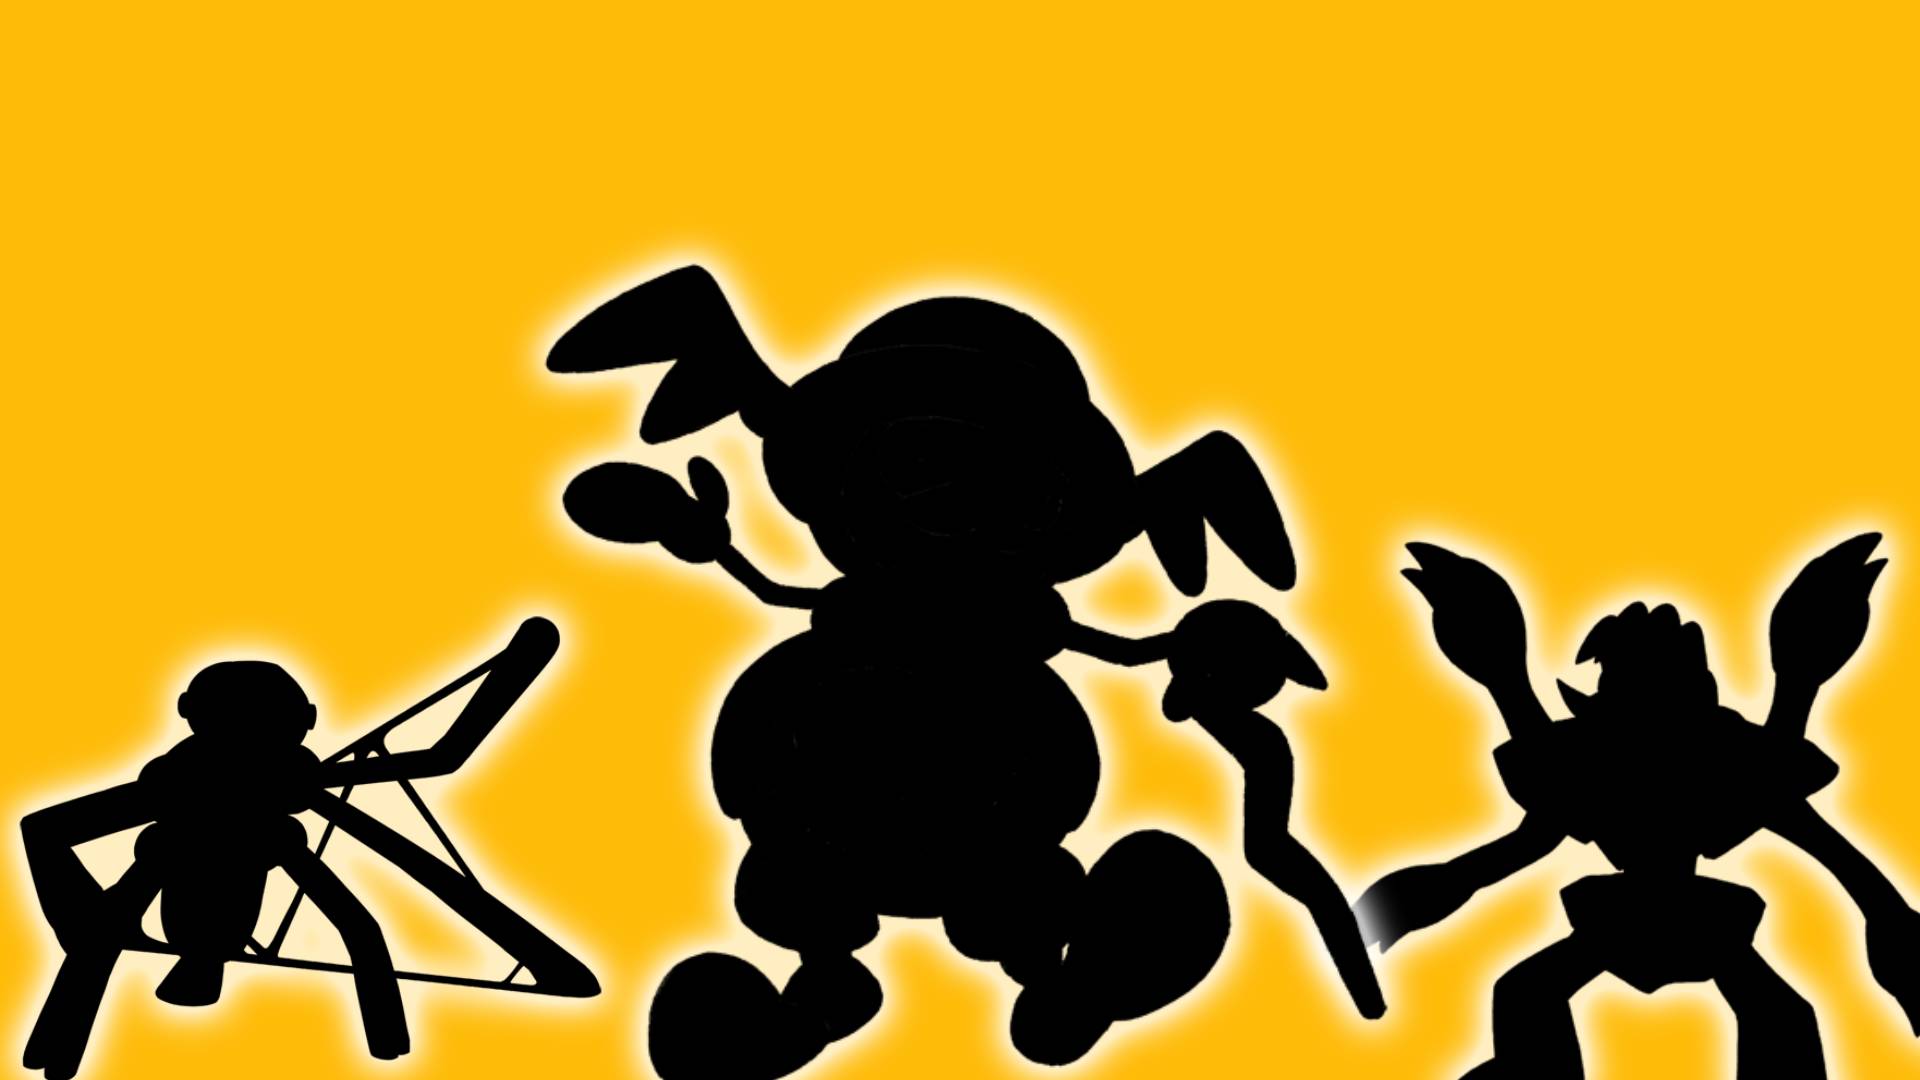 Hitmonchan vs Hitmonlee - Pokemon Yellow - The ULTIMATE Competition 